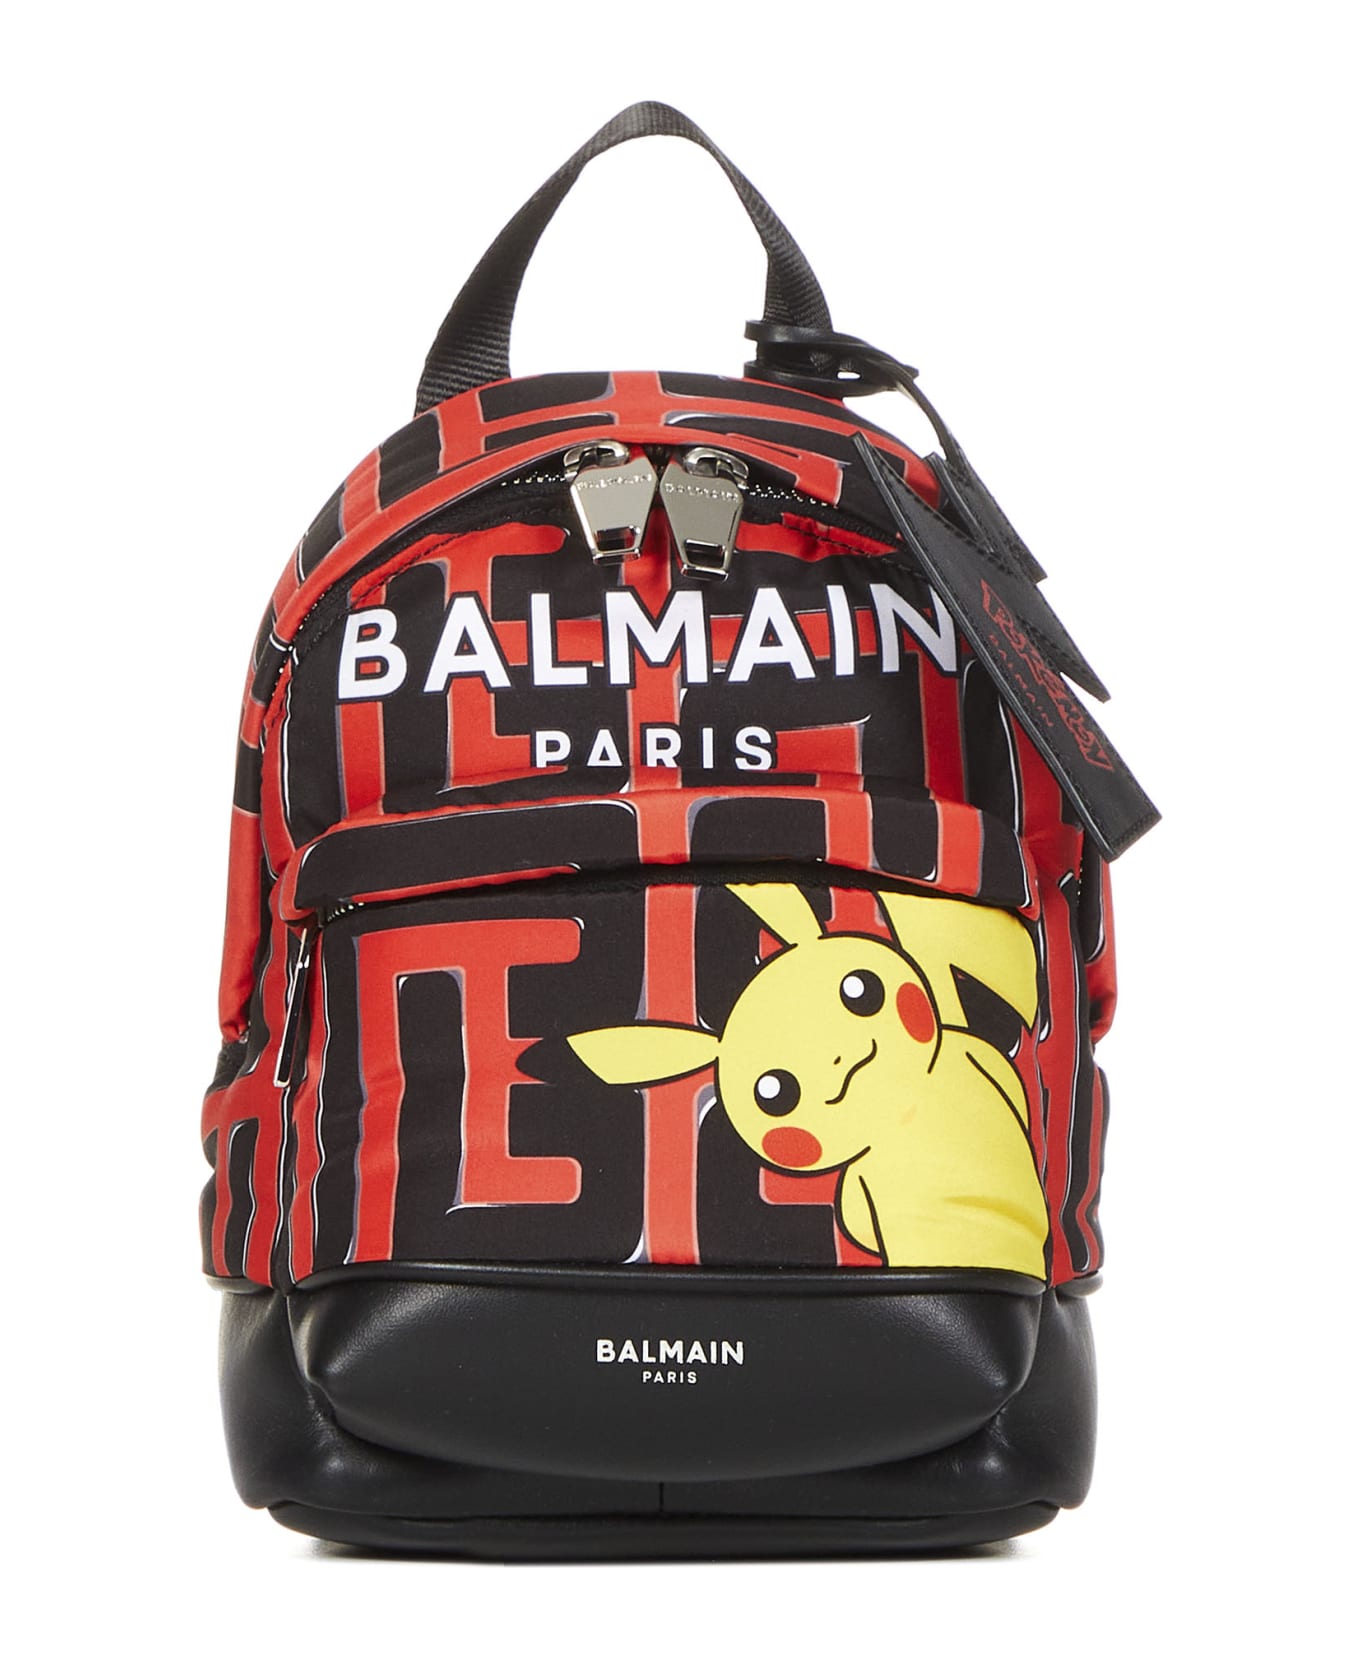 Balmain X Pokémon Backpack - Red